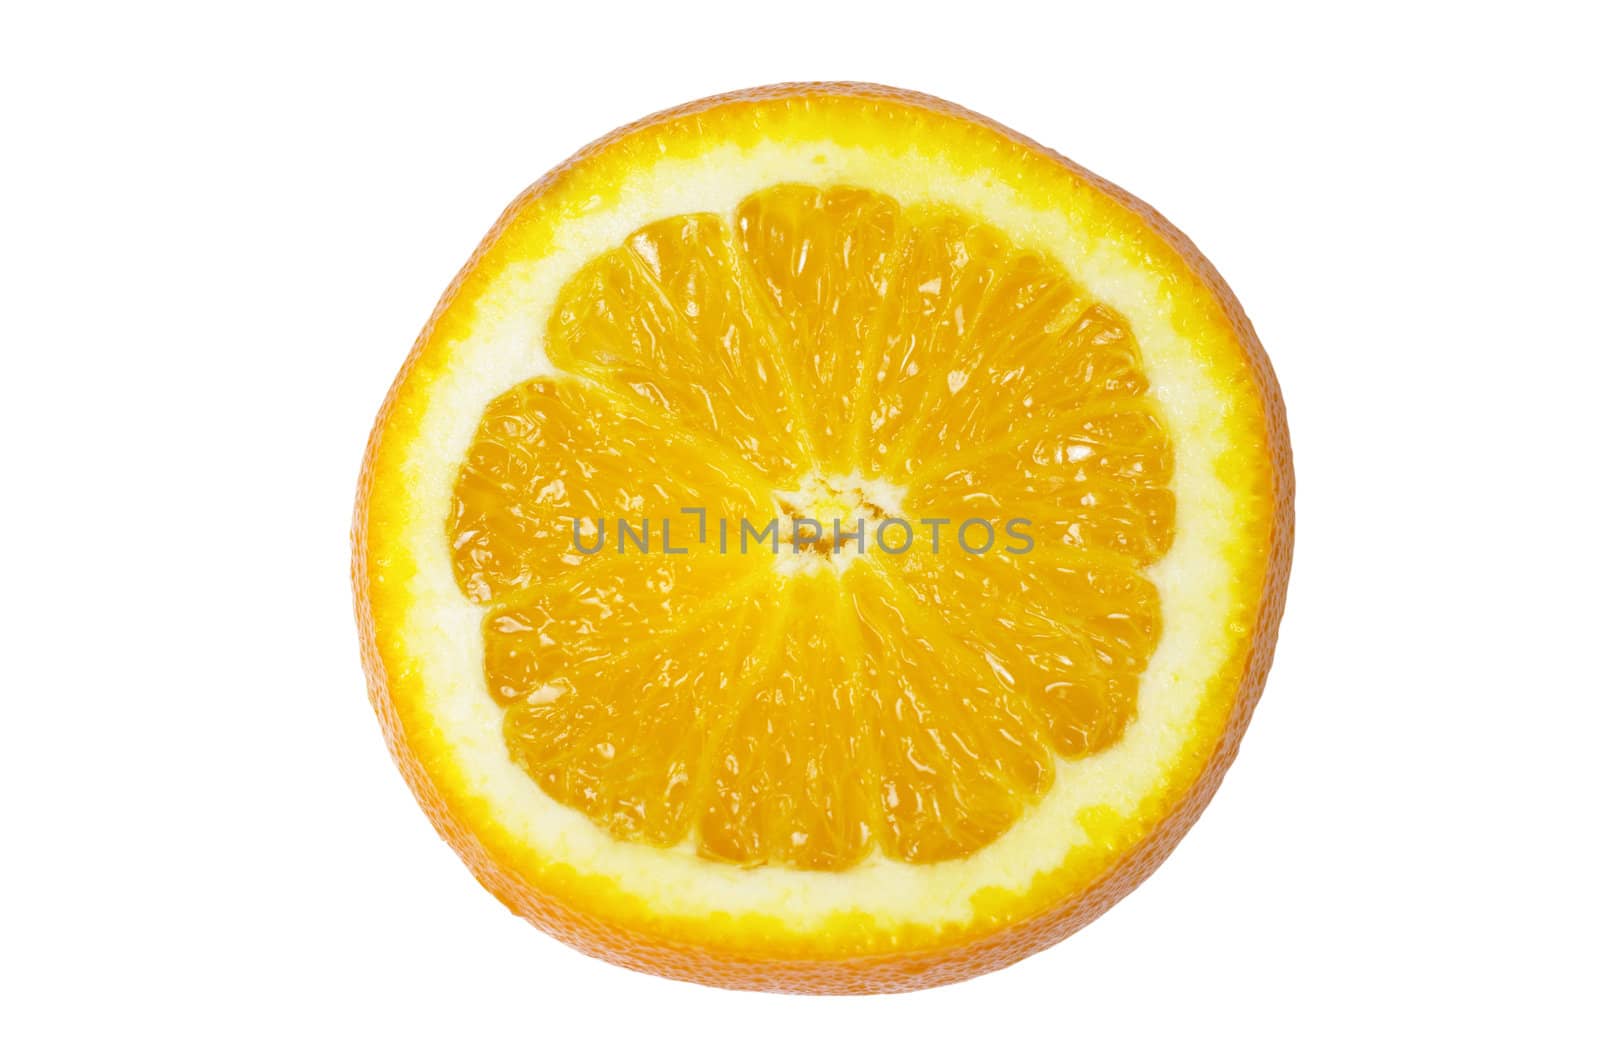 Orange sliced on white background  by pixbox77